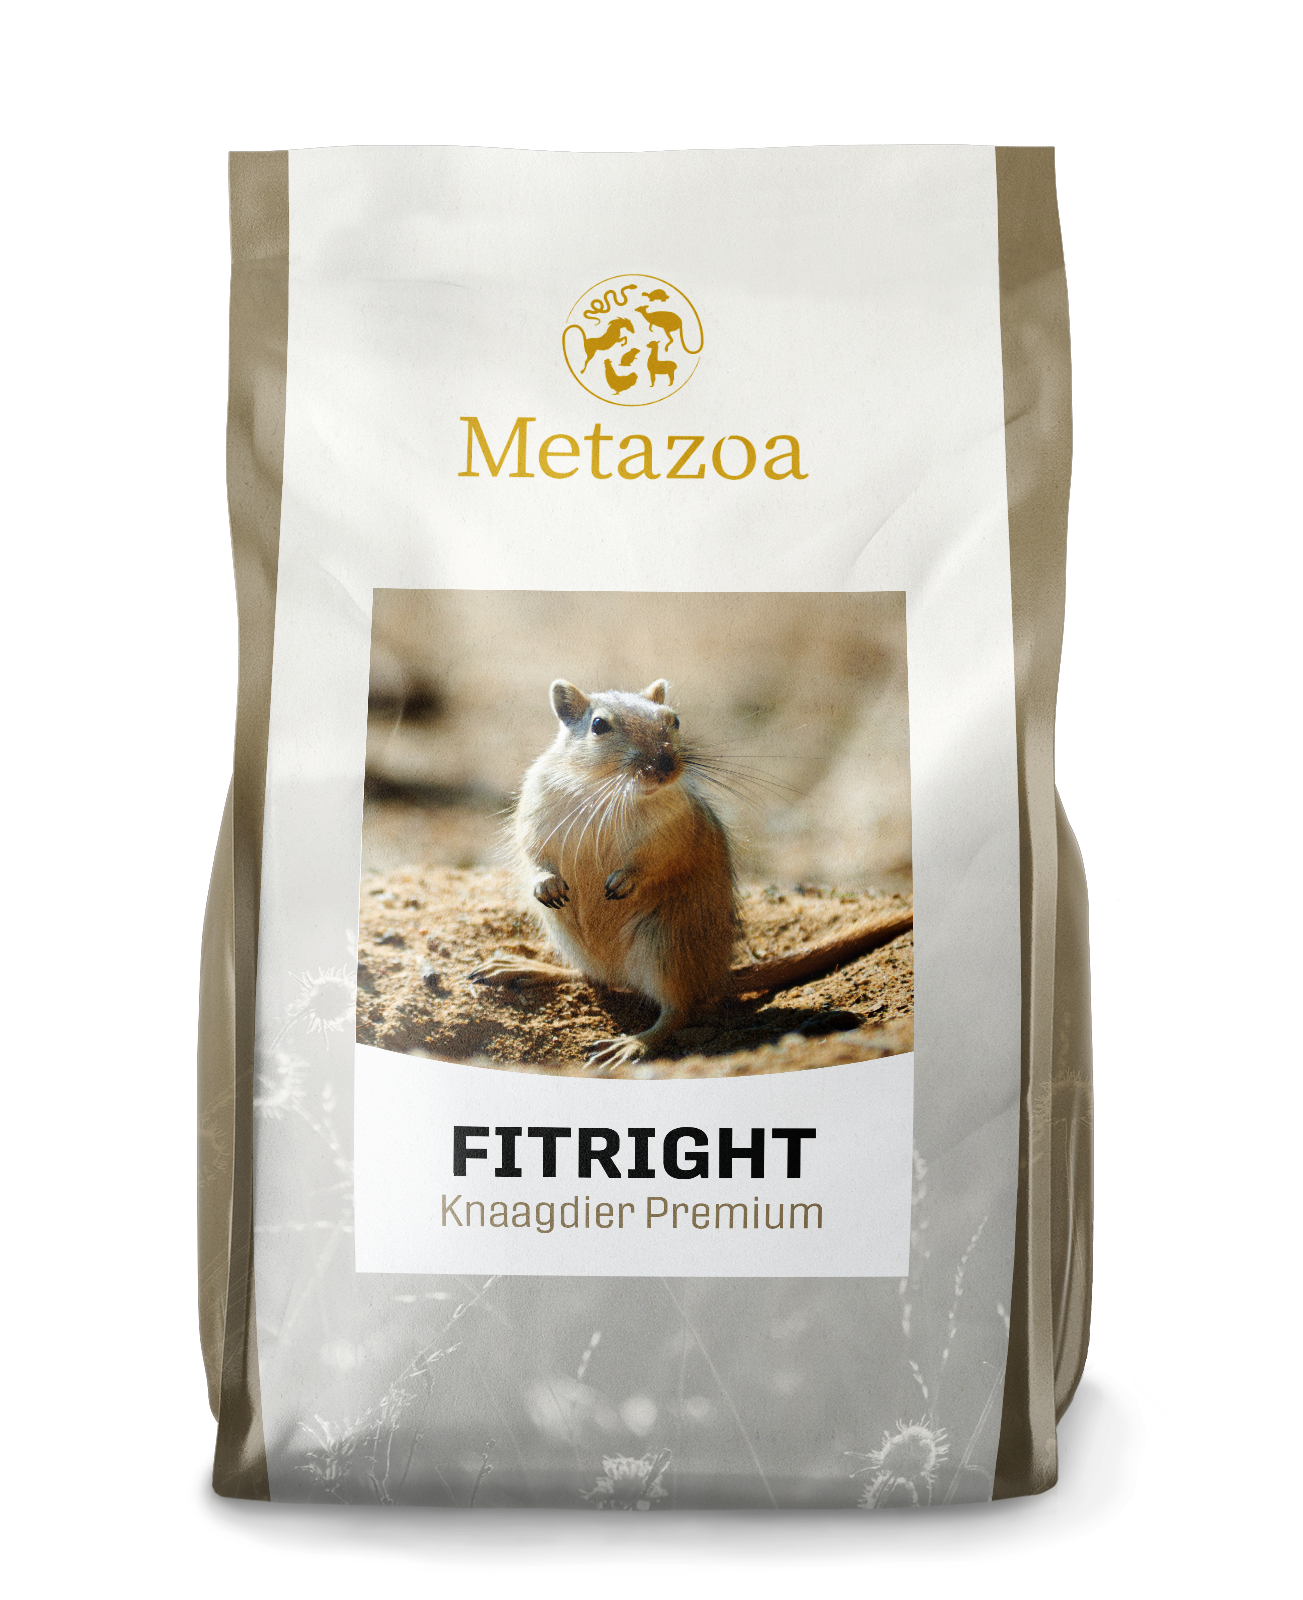 Download Metazoa Verpakking Exotic Fitright Knaagdier Premium 15 kg EAN 4260176355083